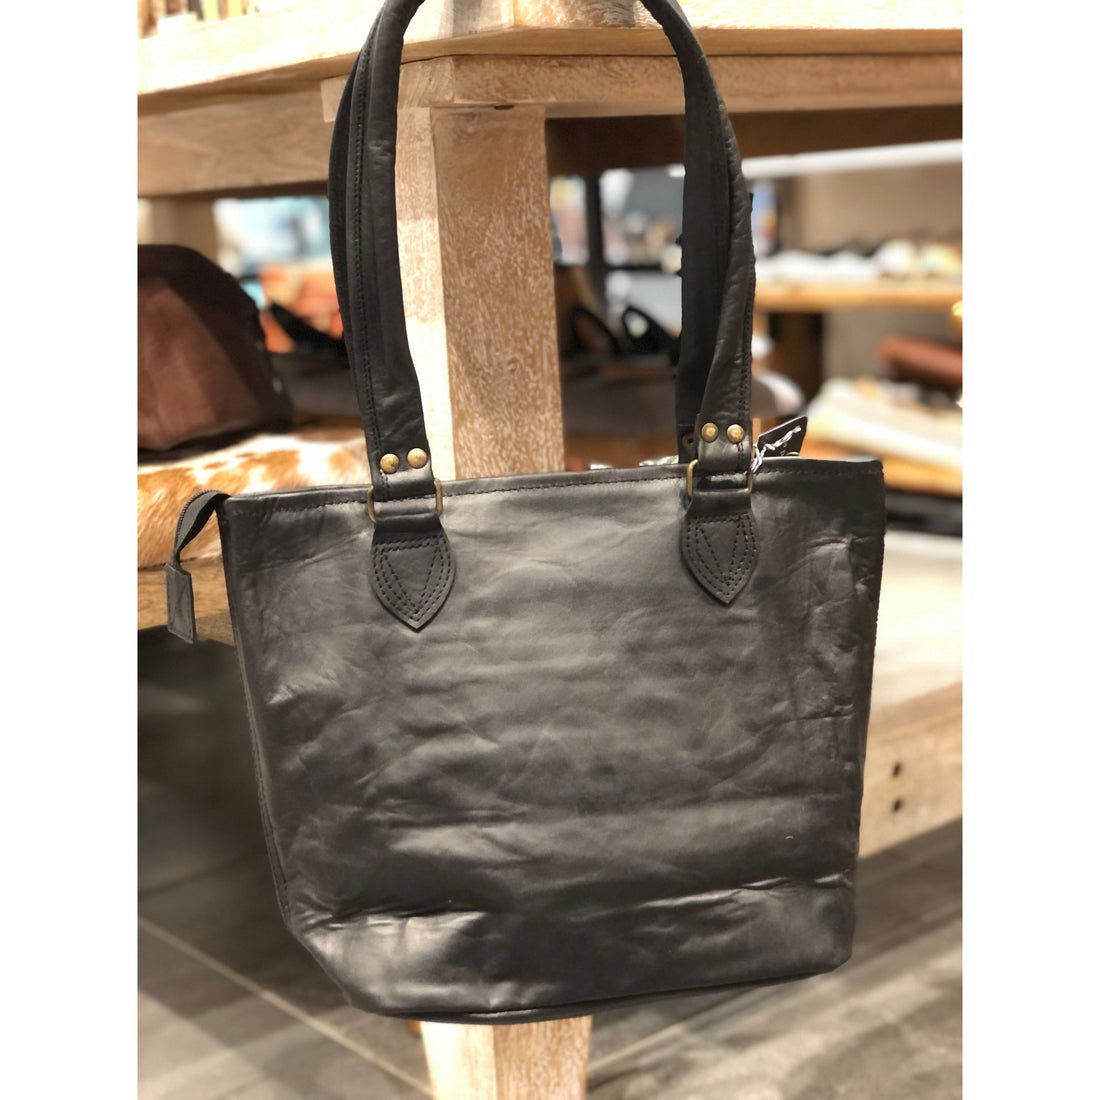 Black leather Bucket Bag tote plain. (No outside pocket)